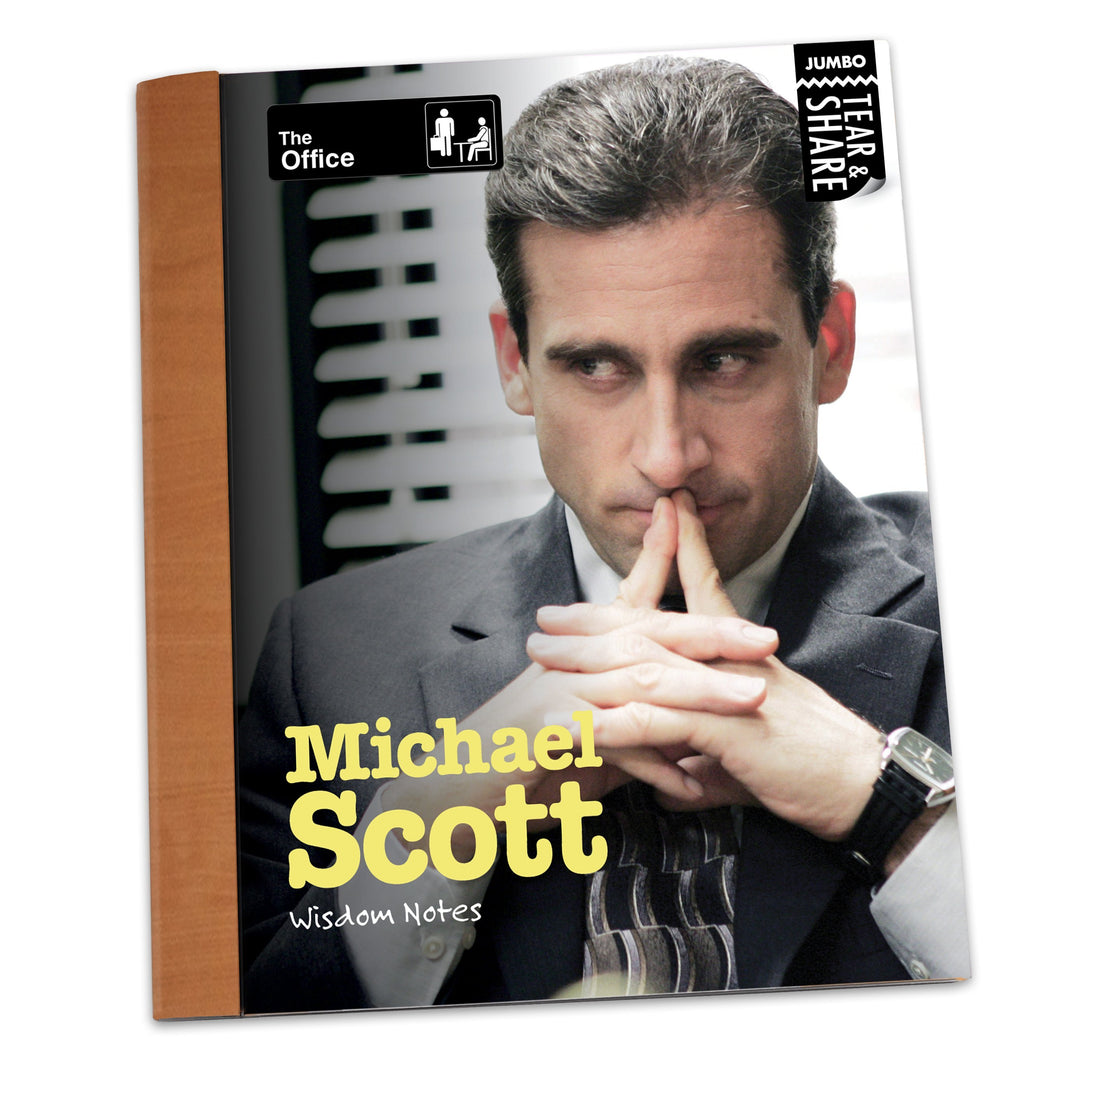 Michael Scott Wisdom Notes book cover.